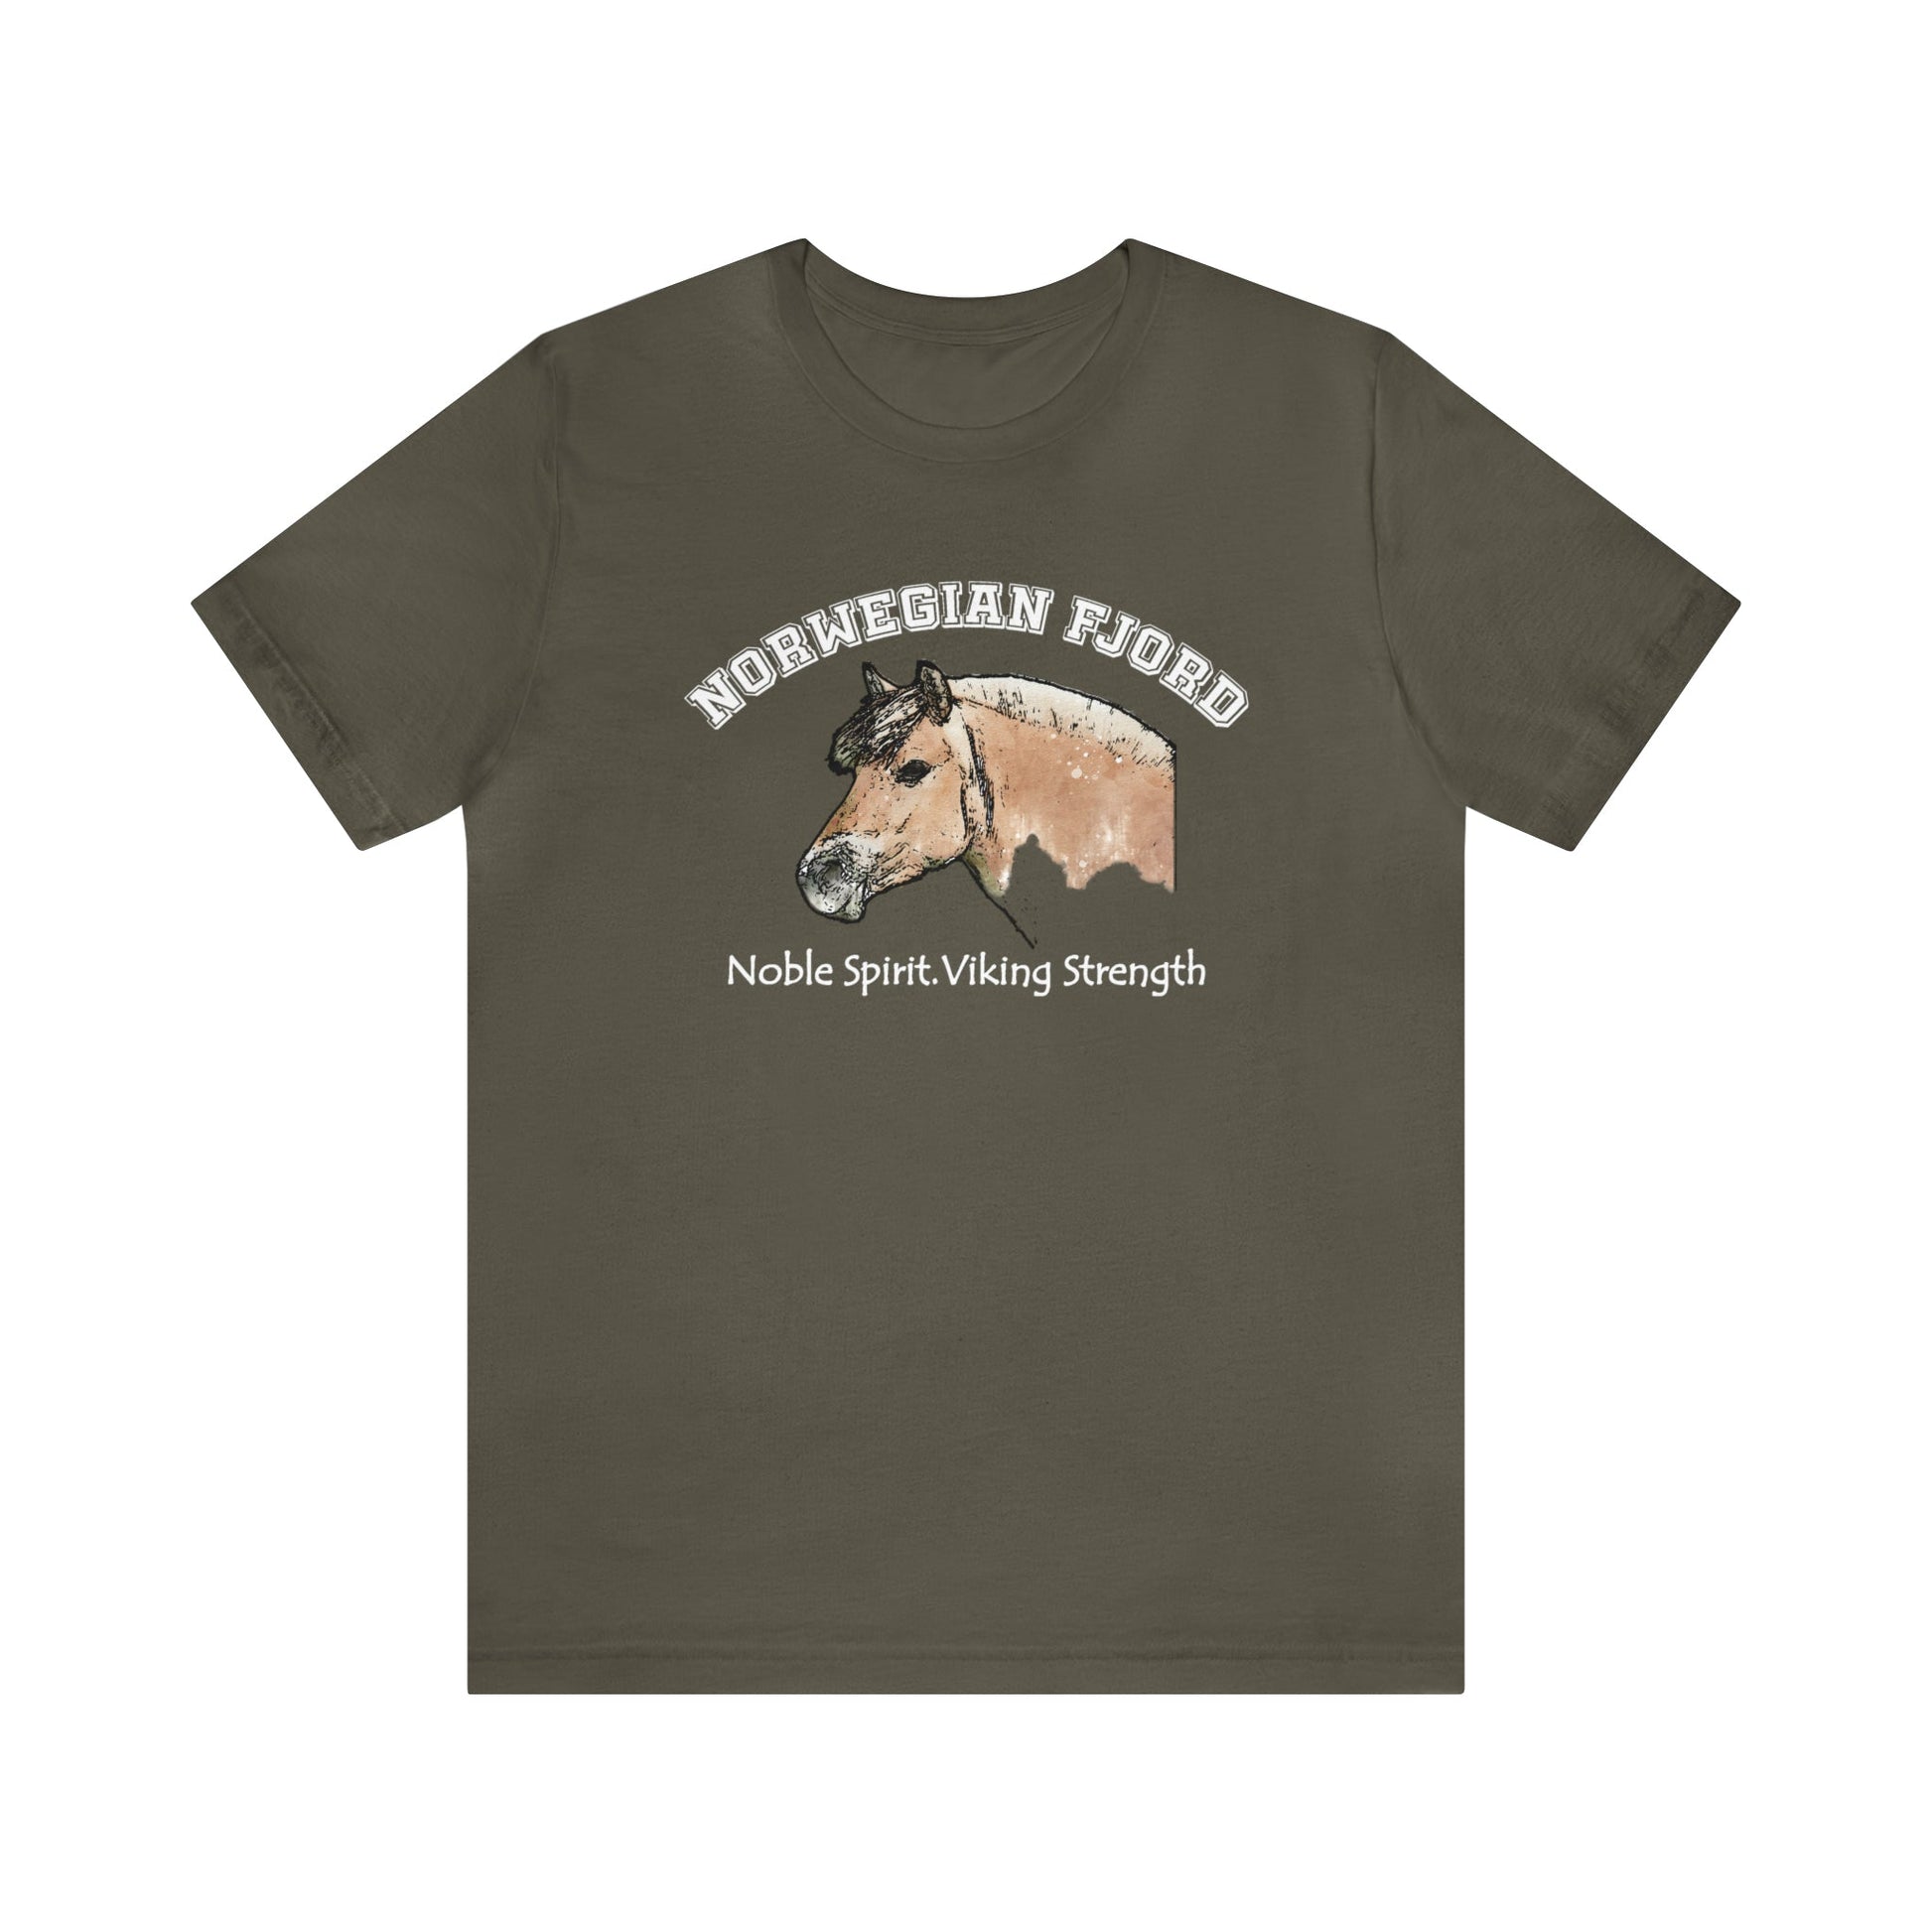 Fjord Horse Shirt, Norwegian Fjord Horse tee, Horse Shirt, County Western Shir - FlooredByArt